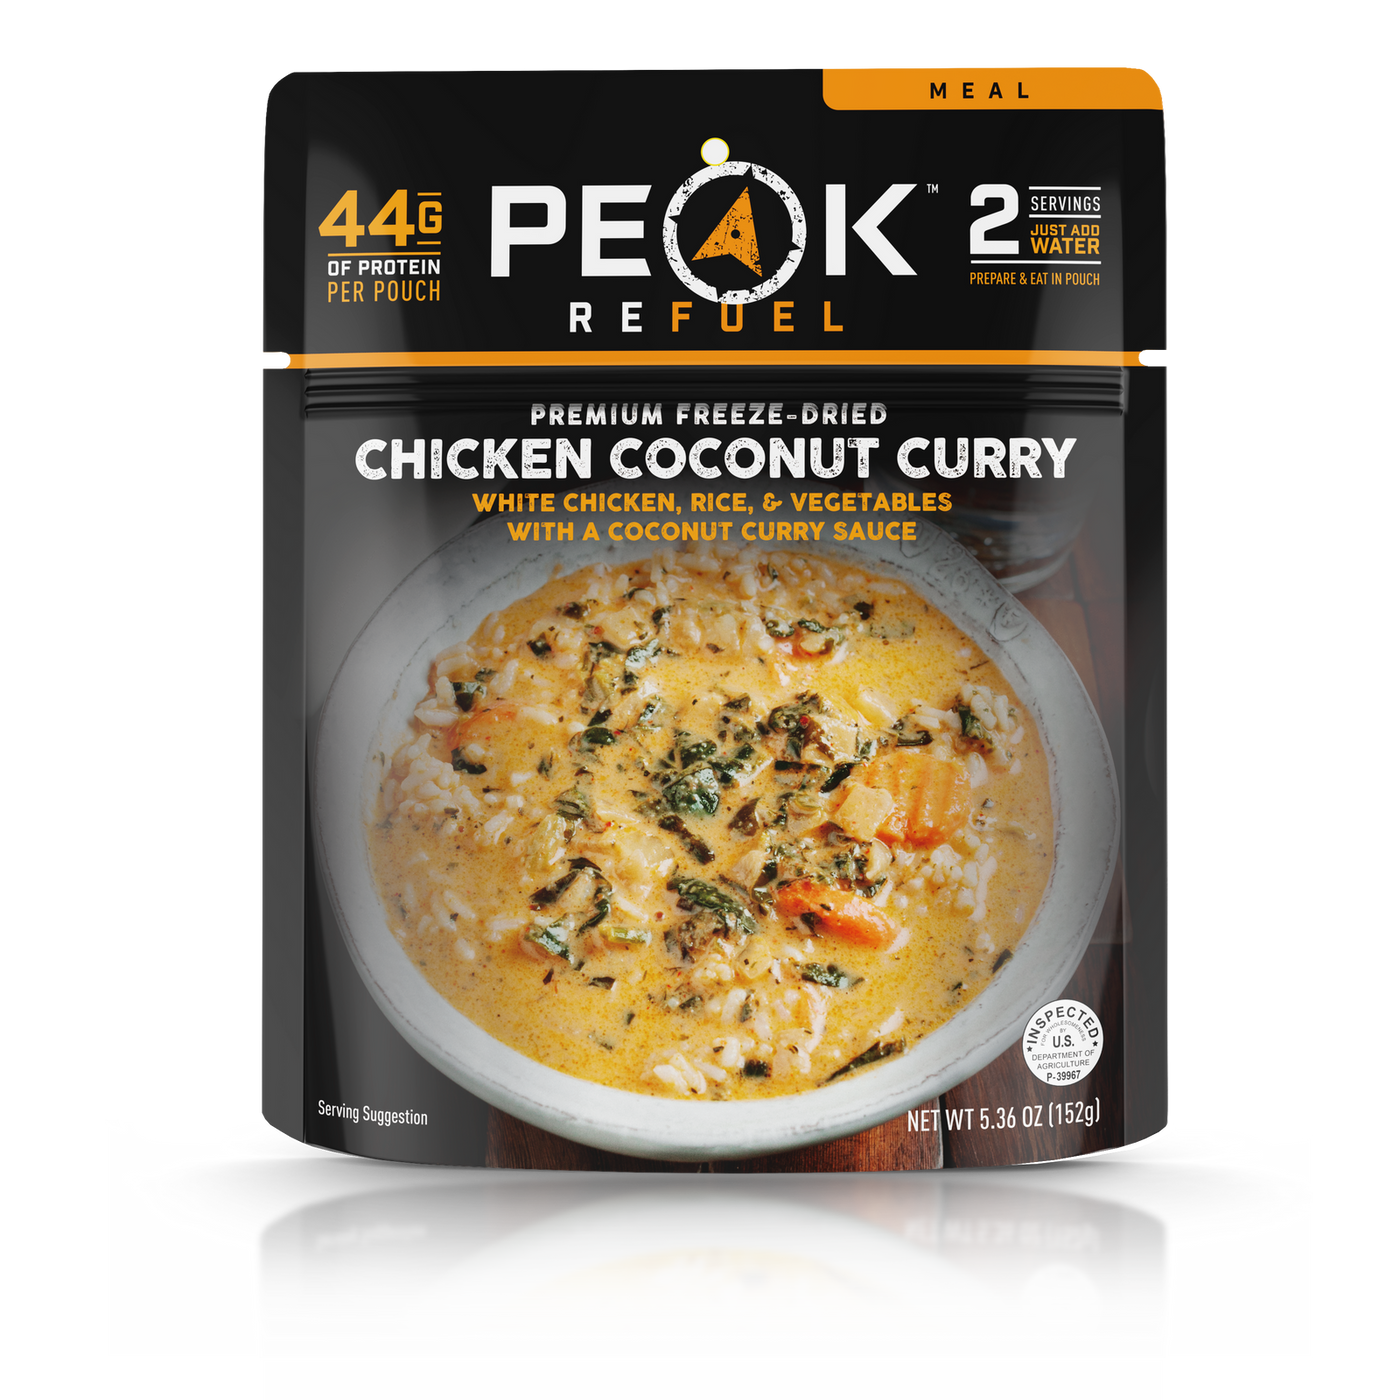 Peak Refuel, Chicken Coconut Curry Meal